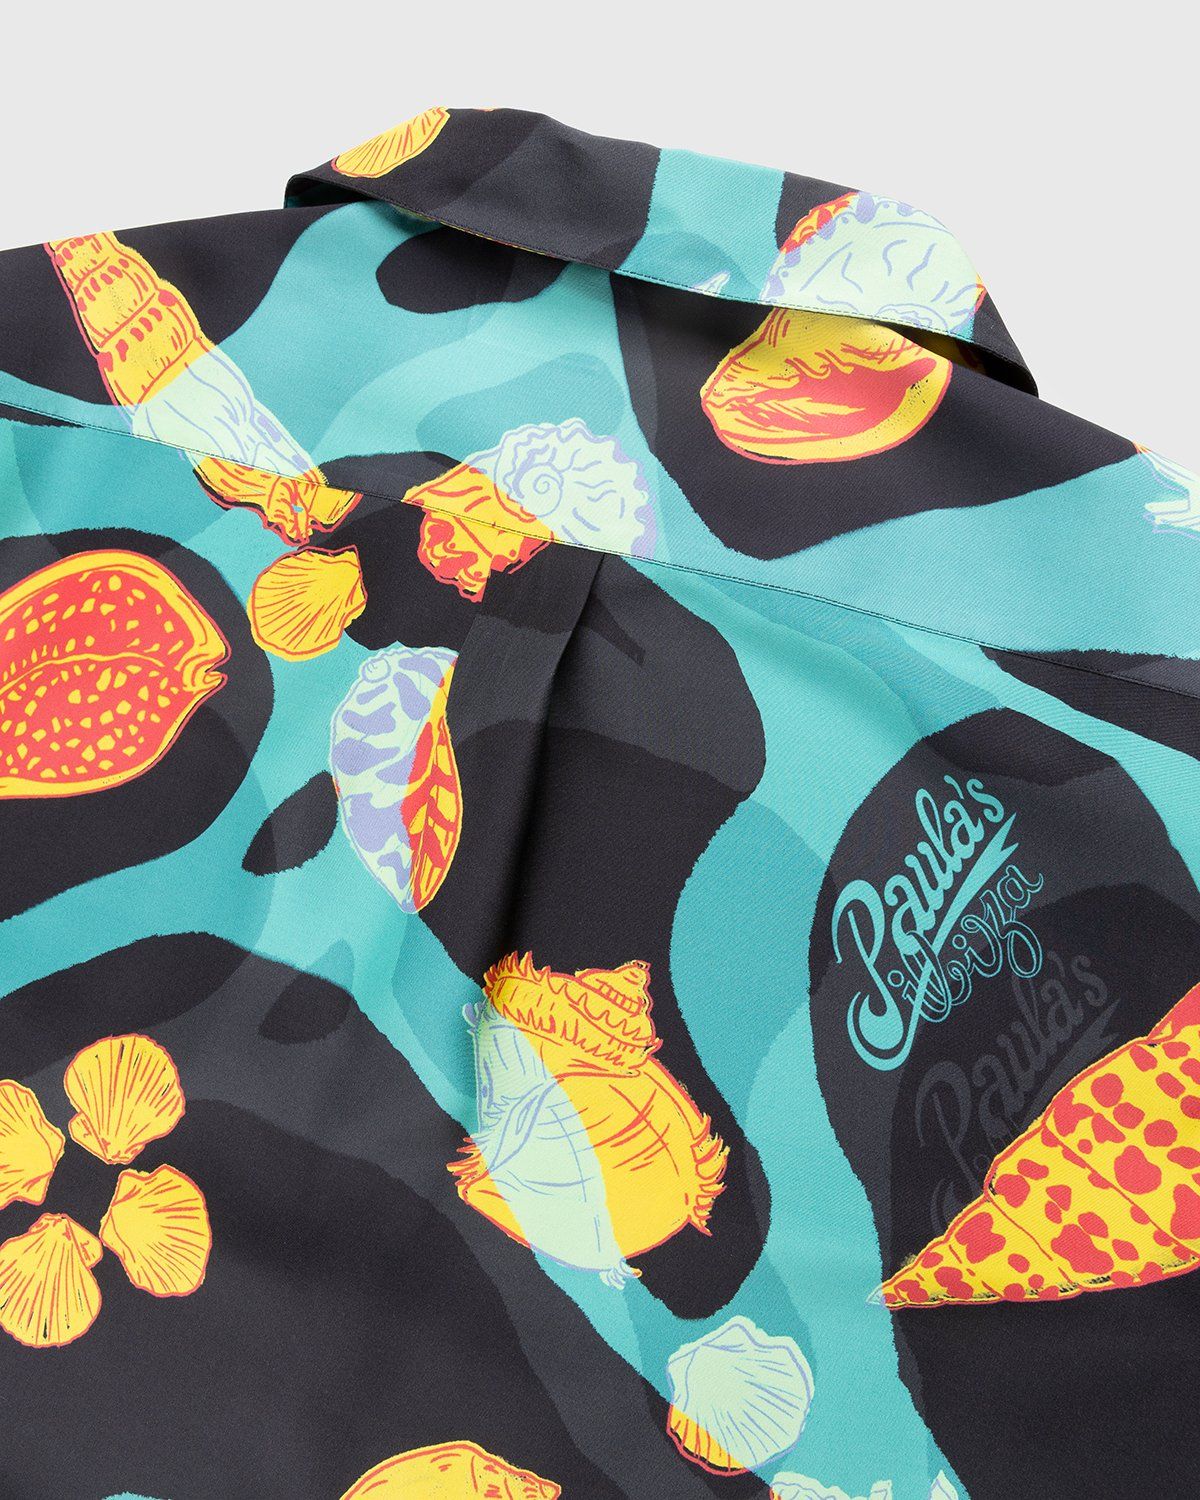 Loewe – Paula's Ibiza Shell Print Bowling Shirt Black - Shortsleeve Shirts - Multi - Image 3